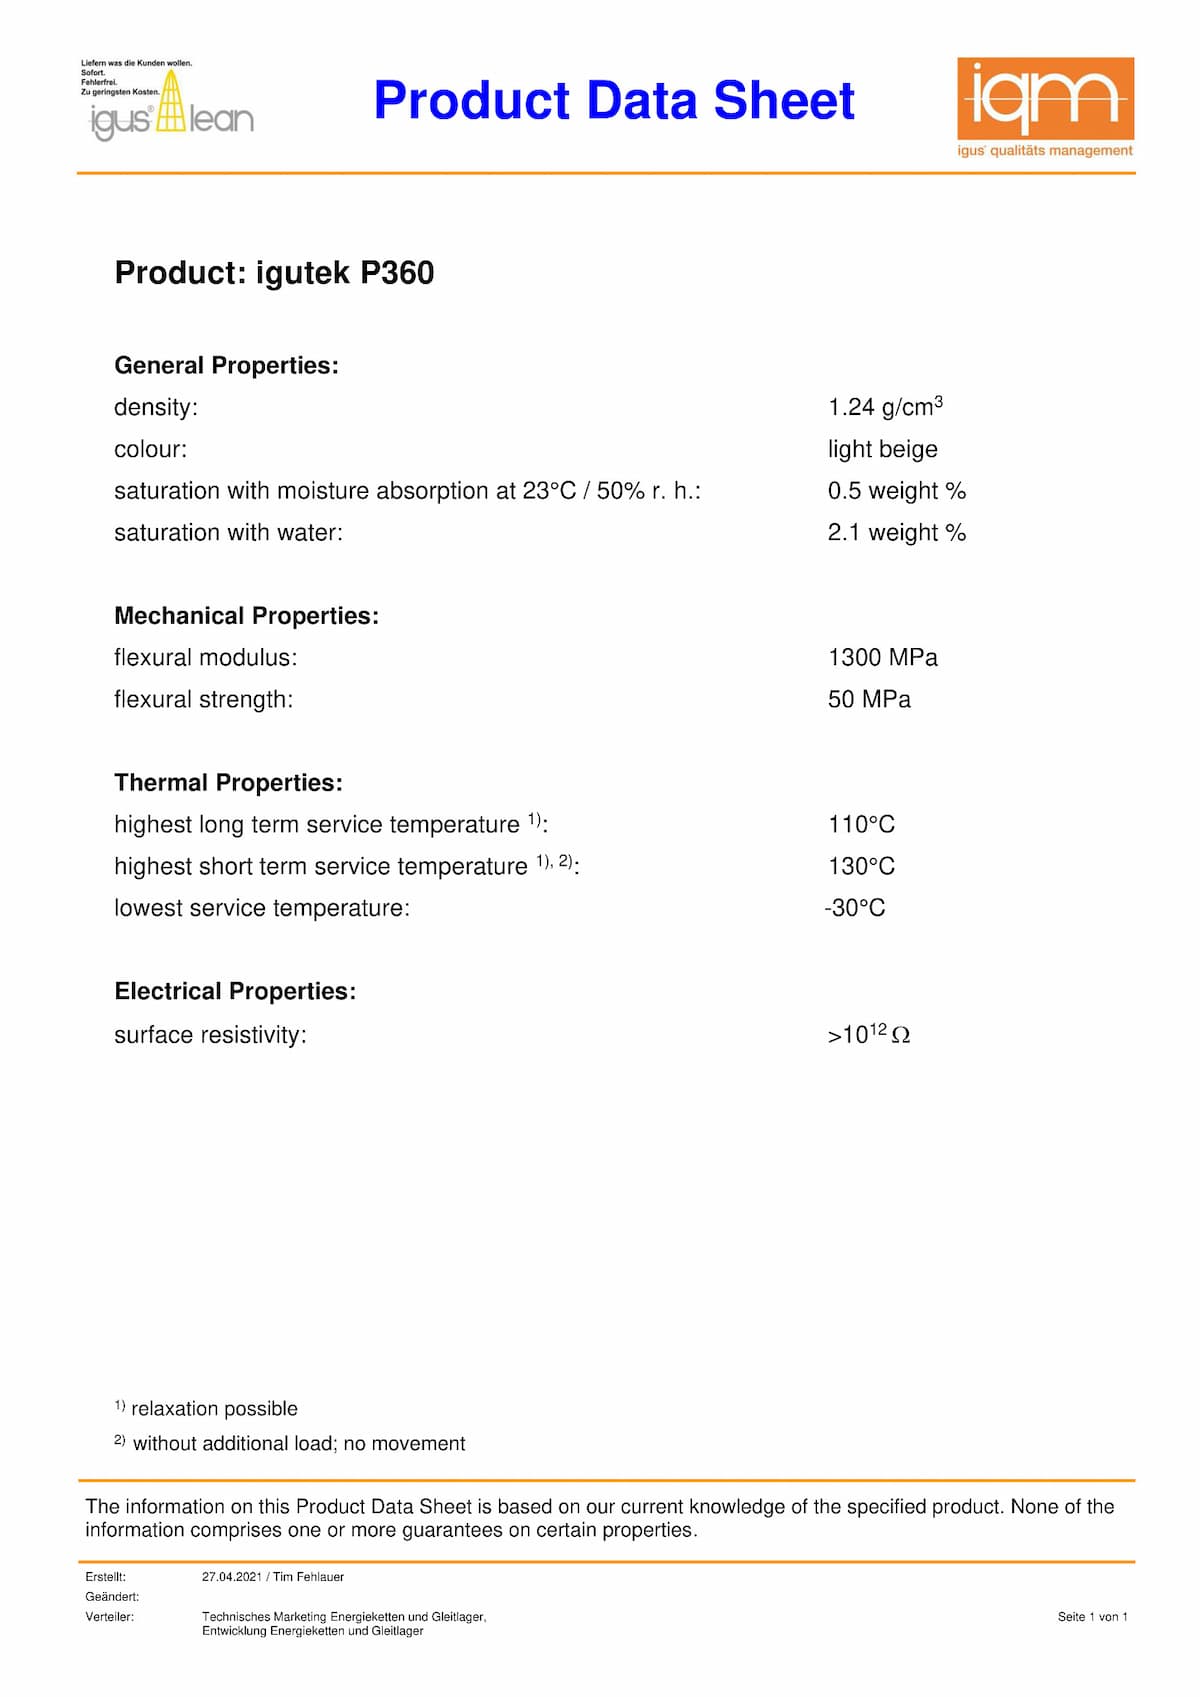 igutek P360 material data sheet